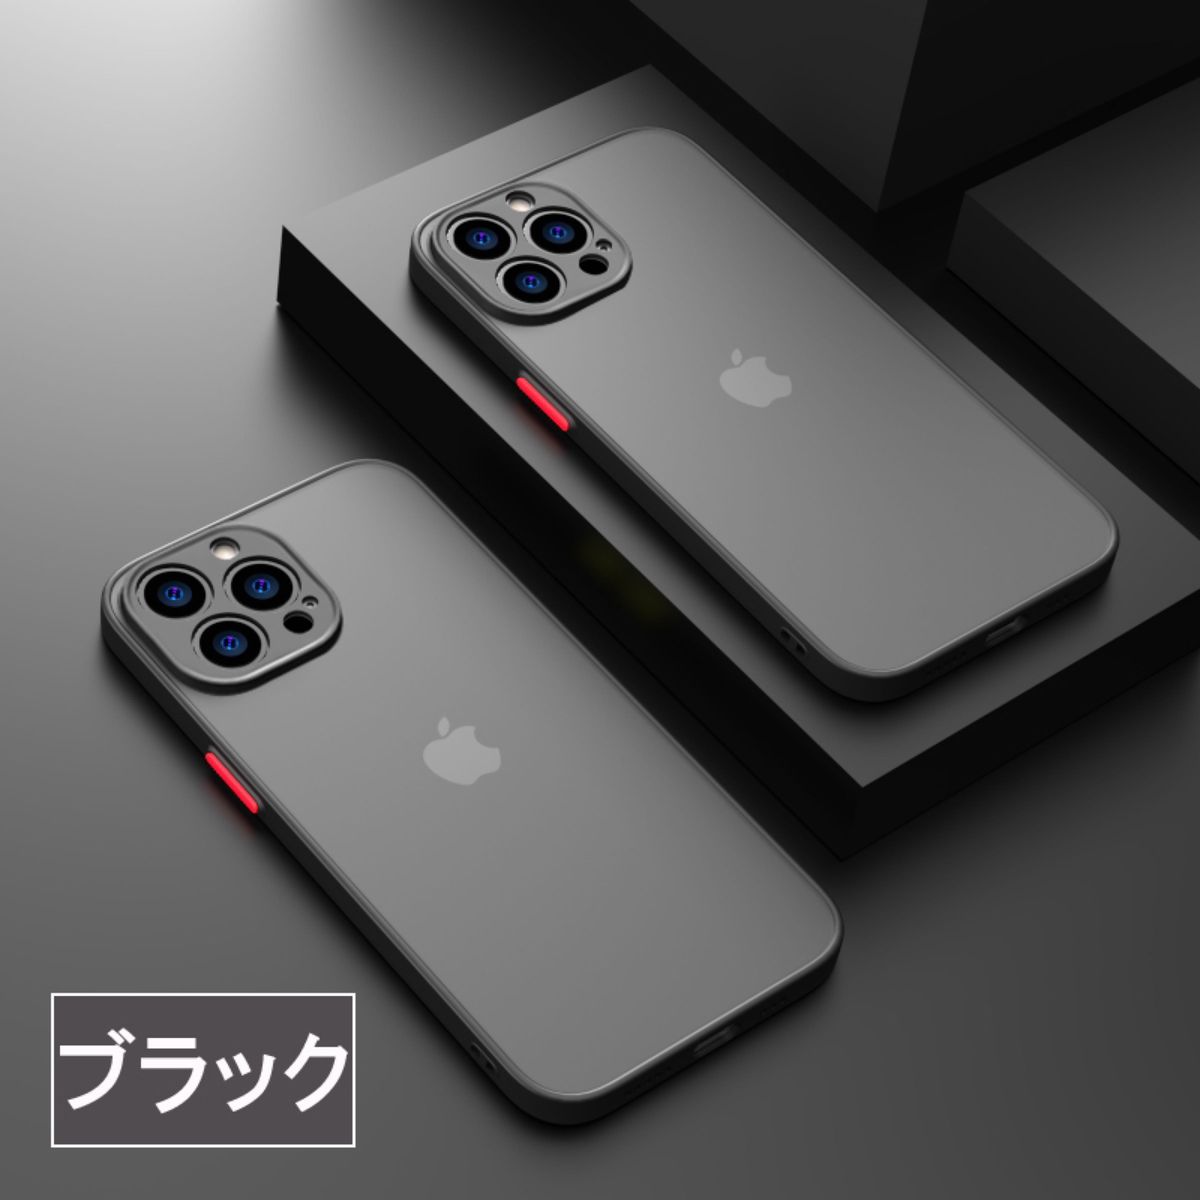 iPhone 11 pro Max Mini カバー ケース マット ワイヤレス充電 全面保護 耐衝撃 超薄型 半透明 ソフト